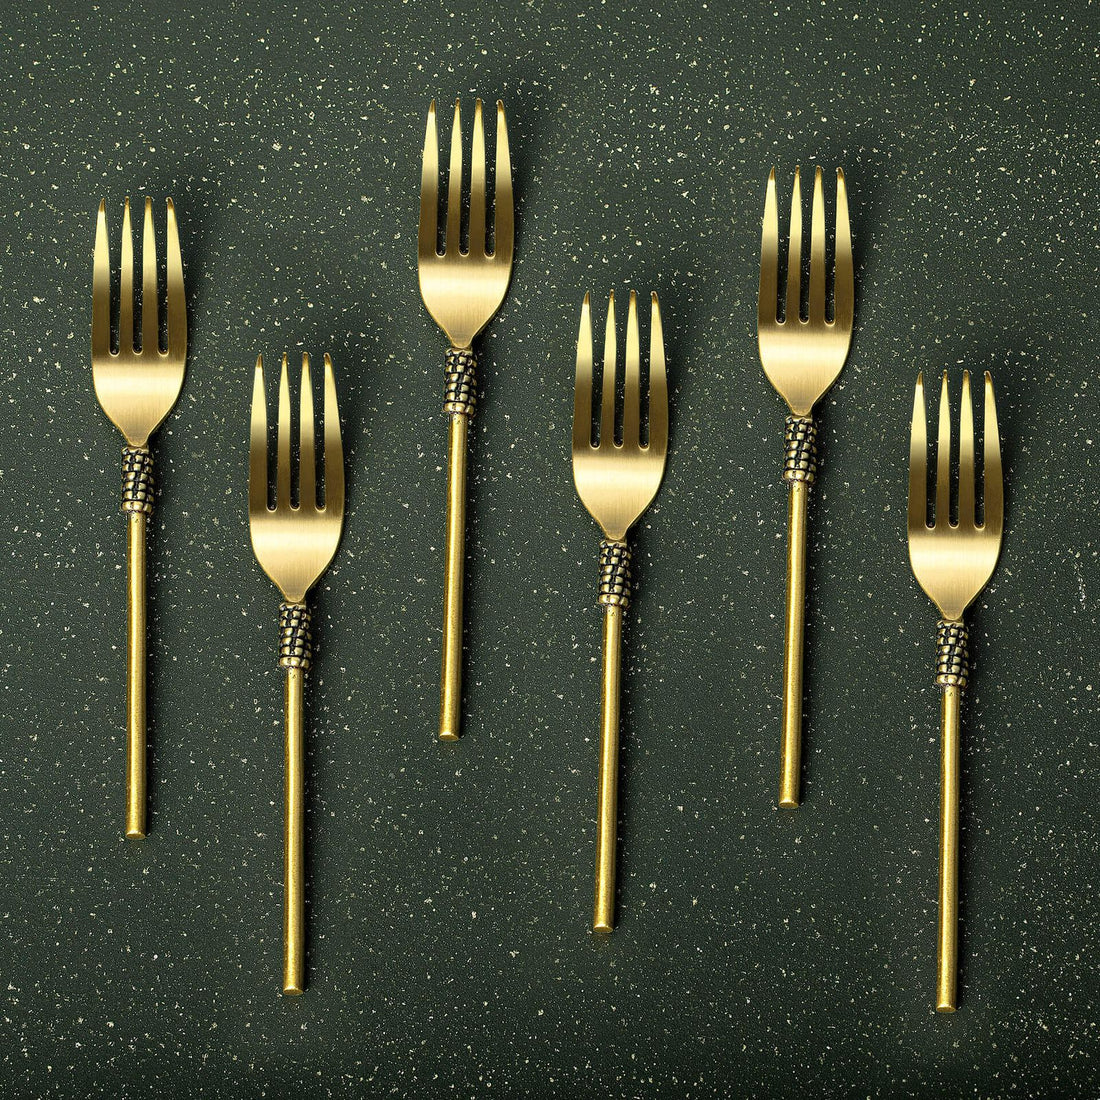 BZAAR Brass Gold-Colored Masai Table Fork - Set of 6